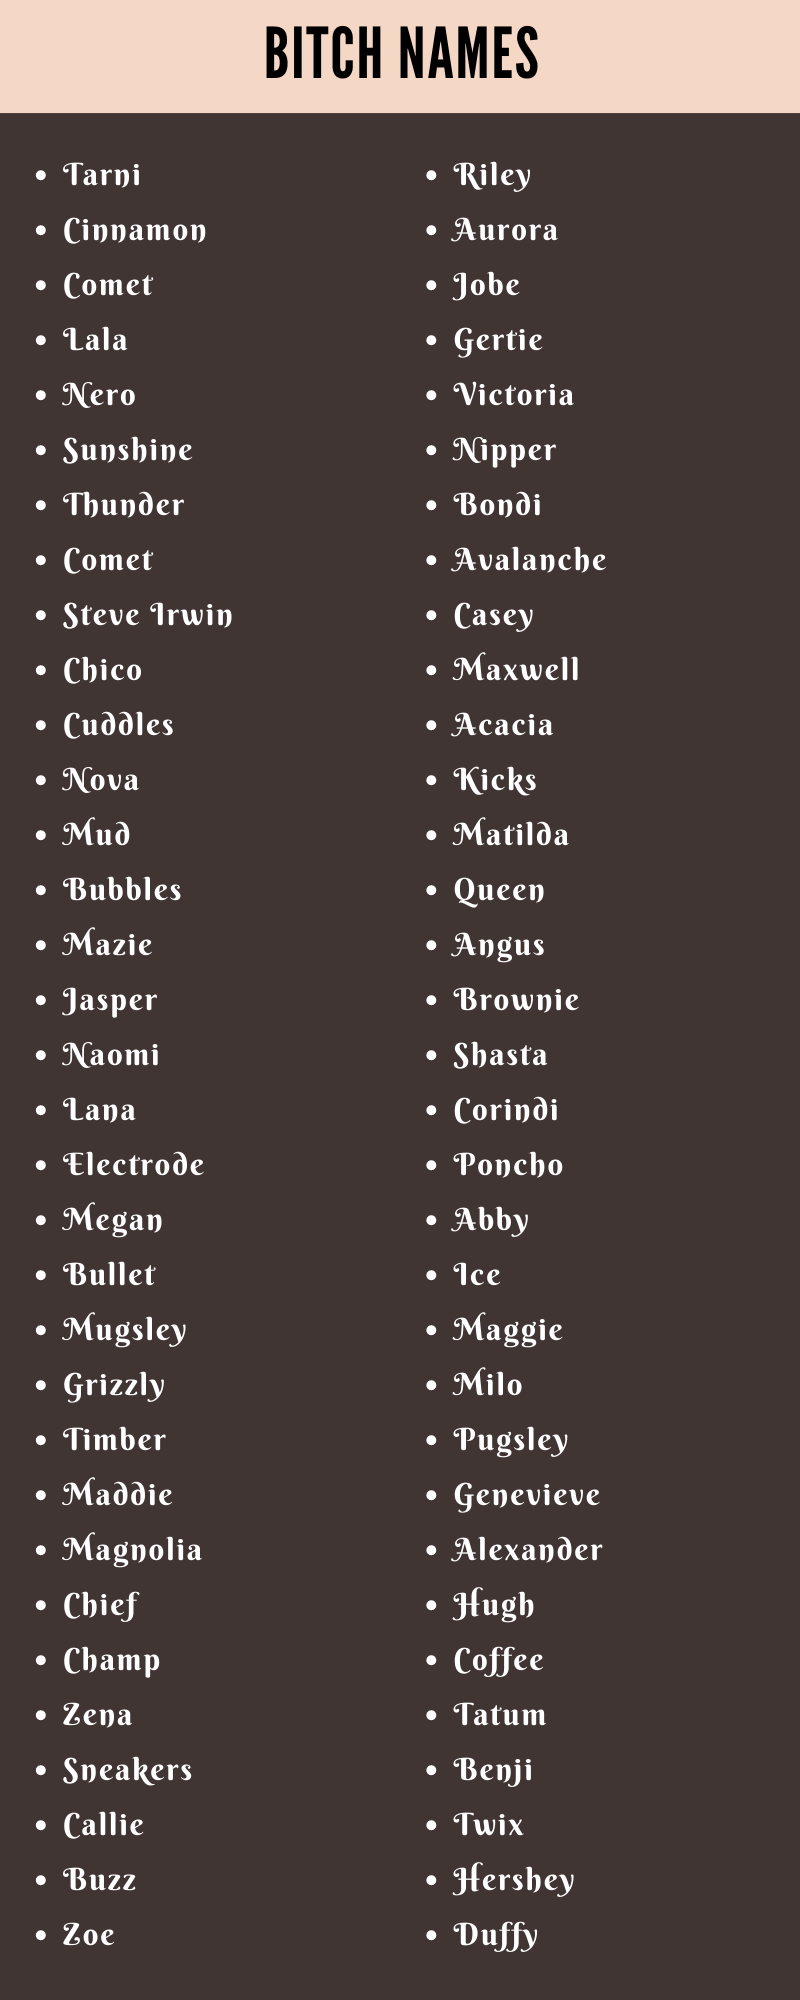 Bitch Names